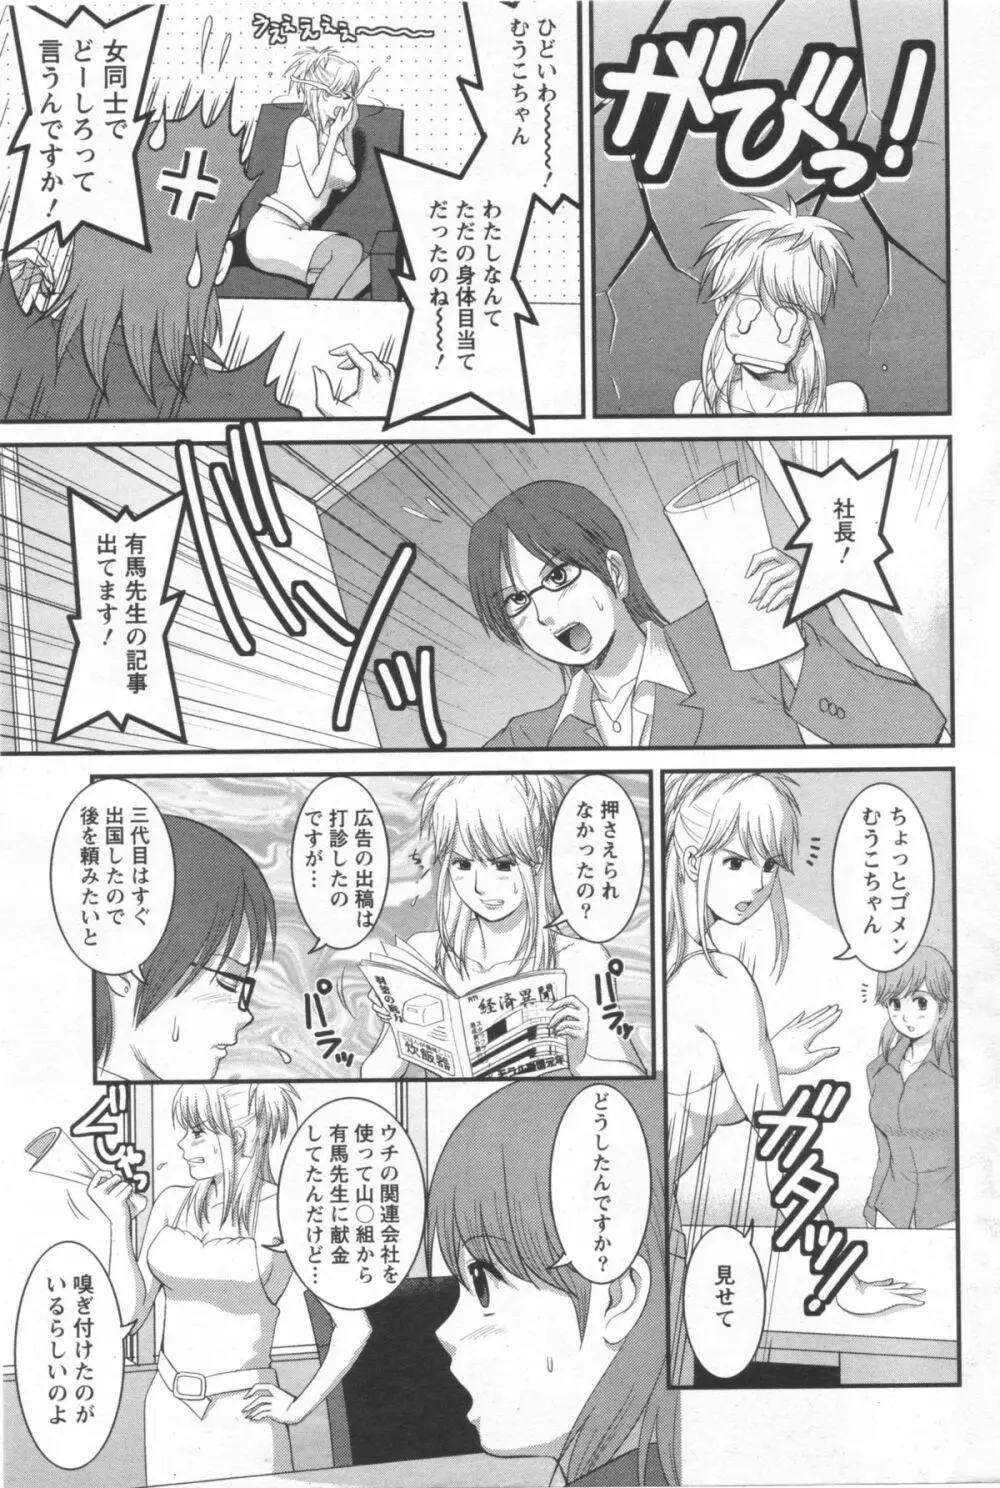 Haken no Muuko-san 10 8ページ